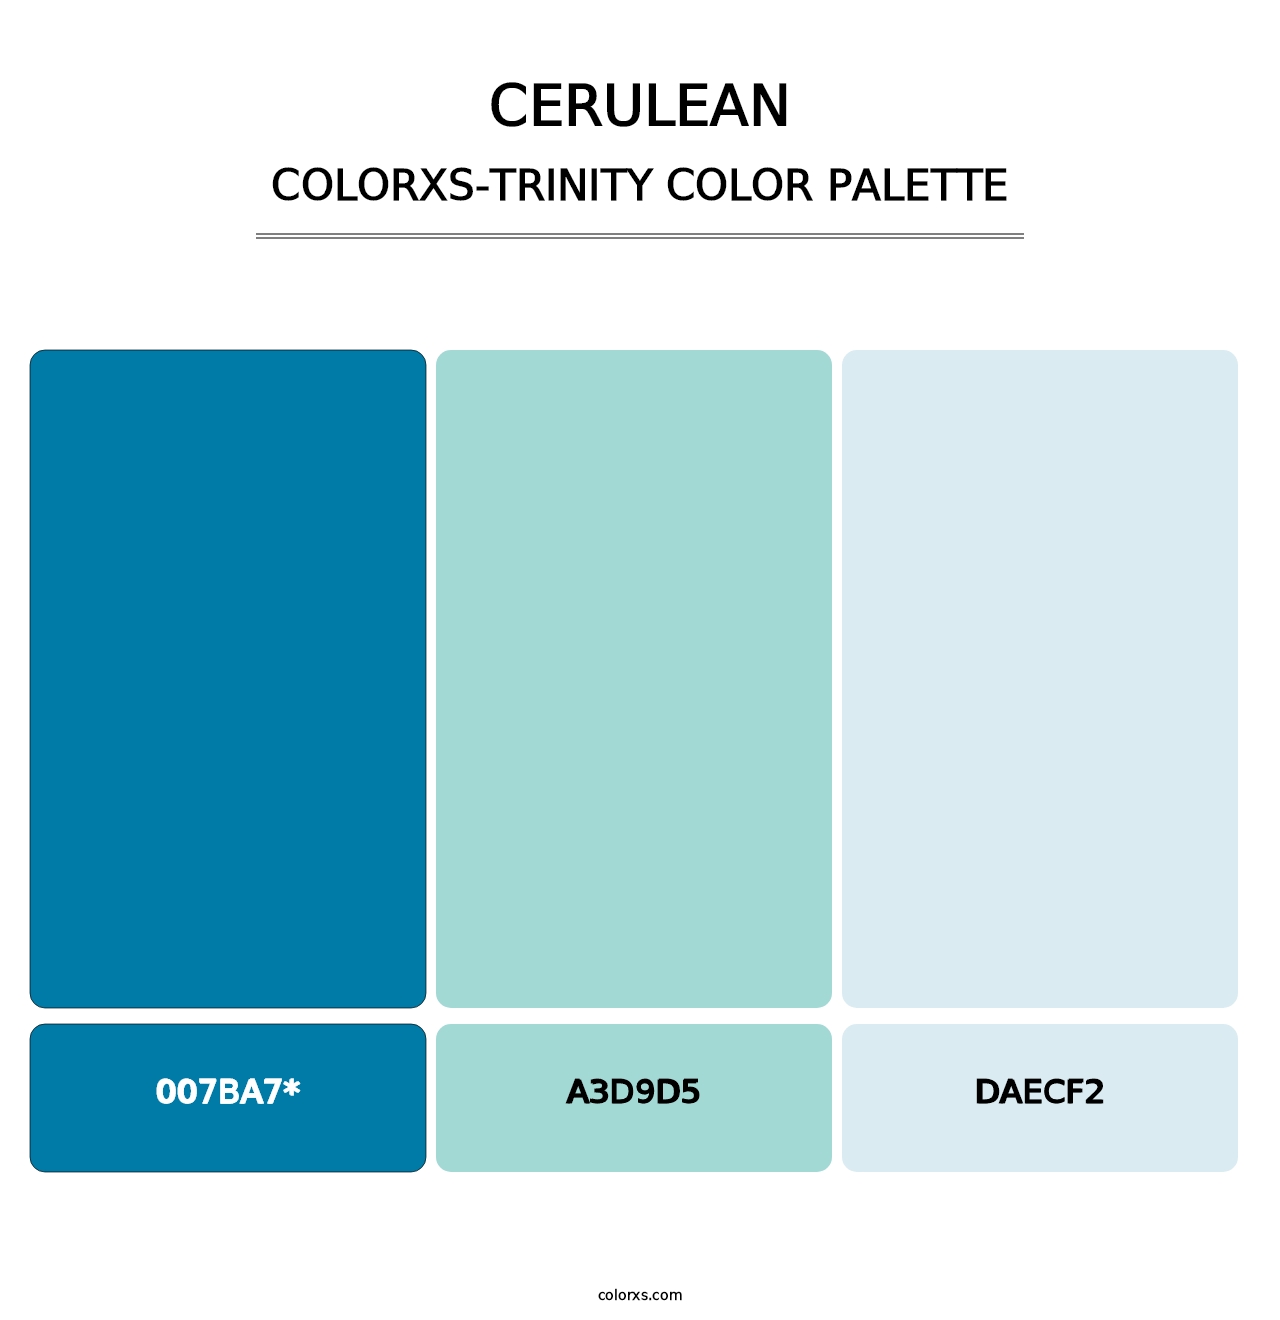 Cerulean - Colorxs Trinity Palette